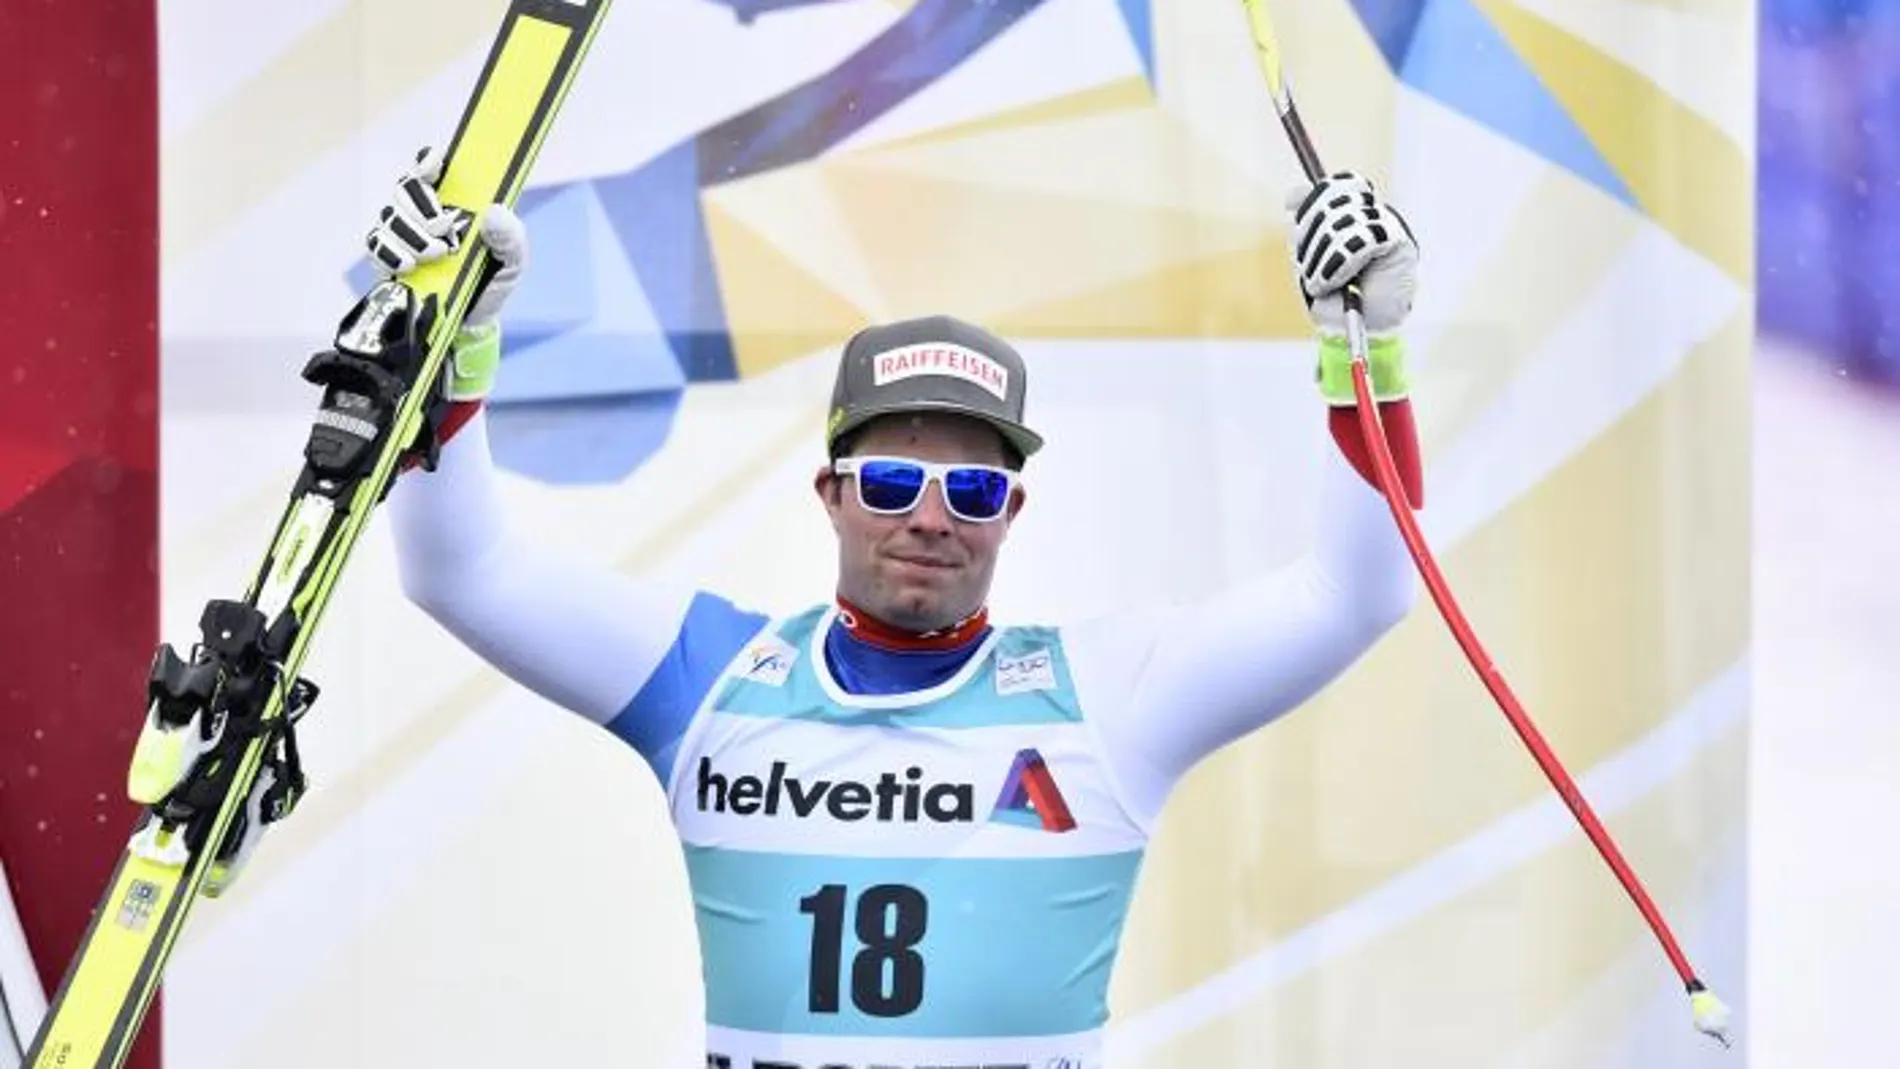 El suizo Beat Feuz vencedor en el descenso de St. Moritz